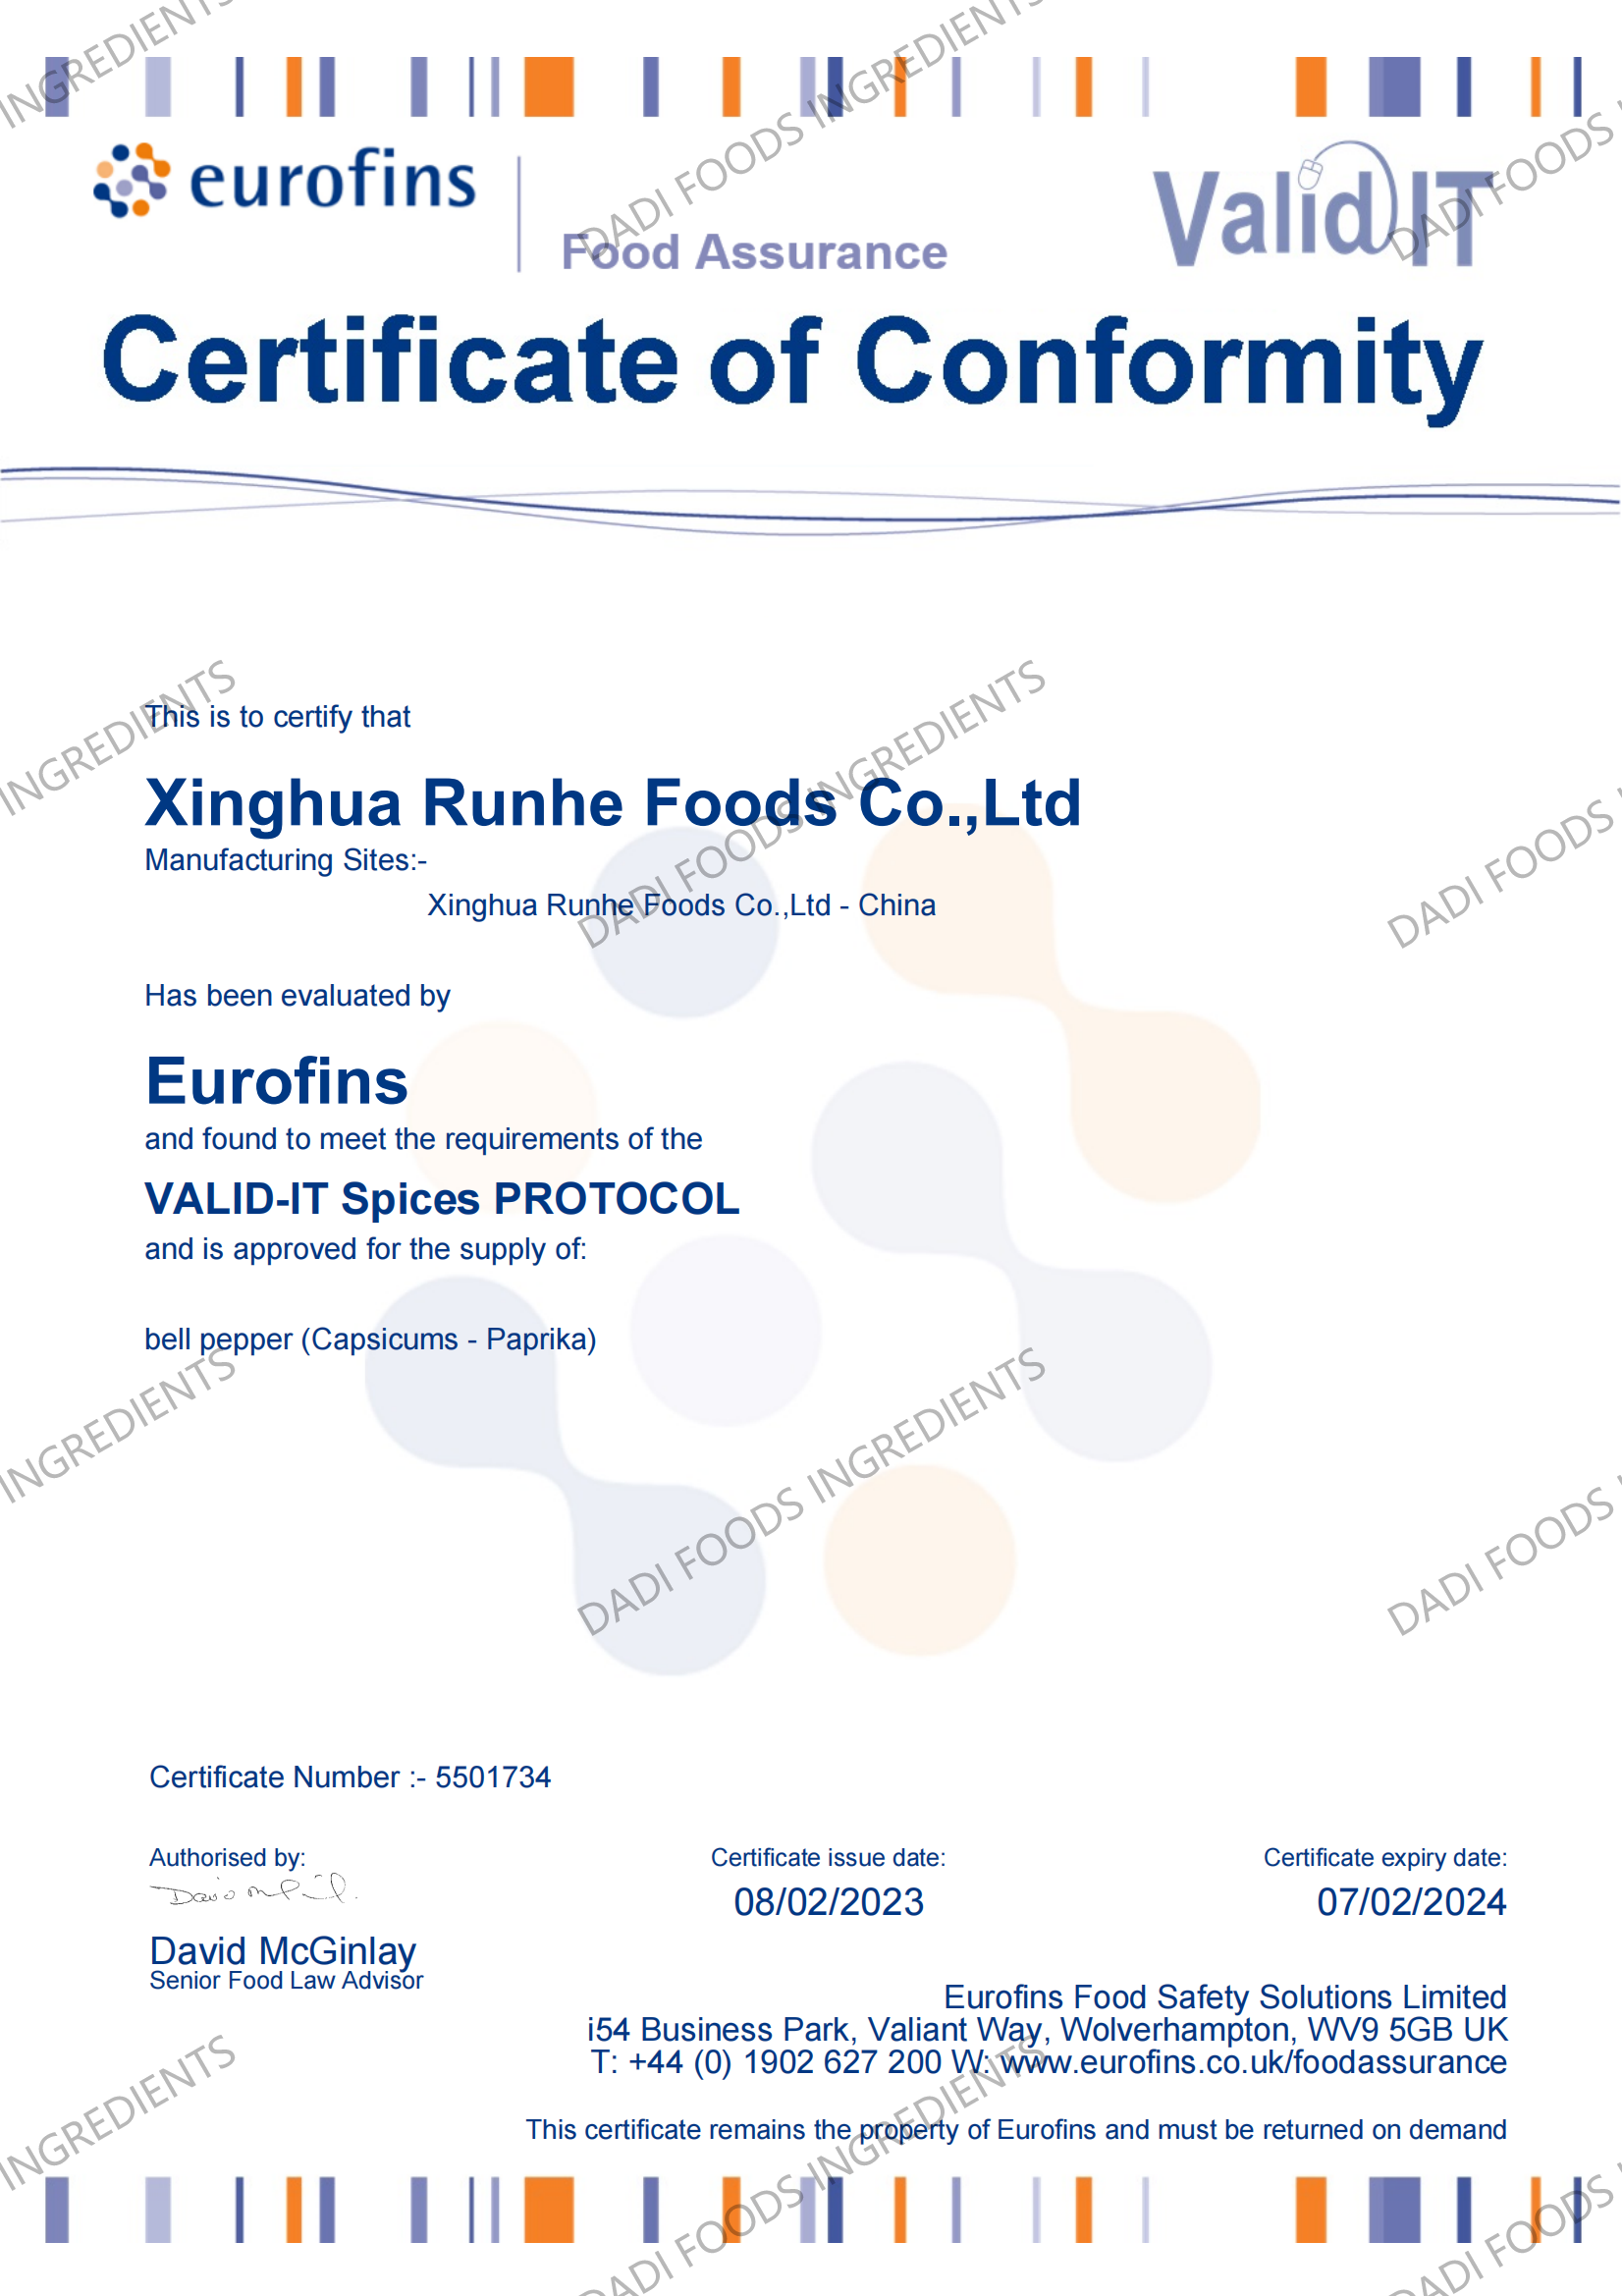 Xinghua Runhe Foods Co.,Ltd - 550